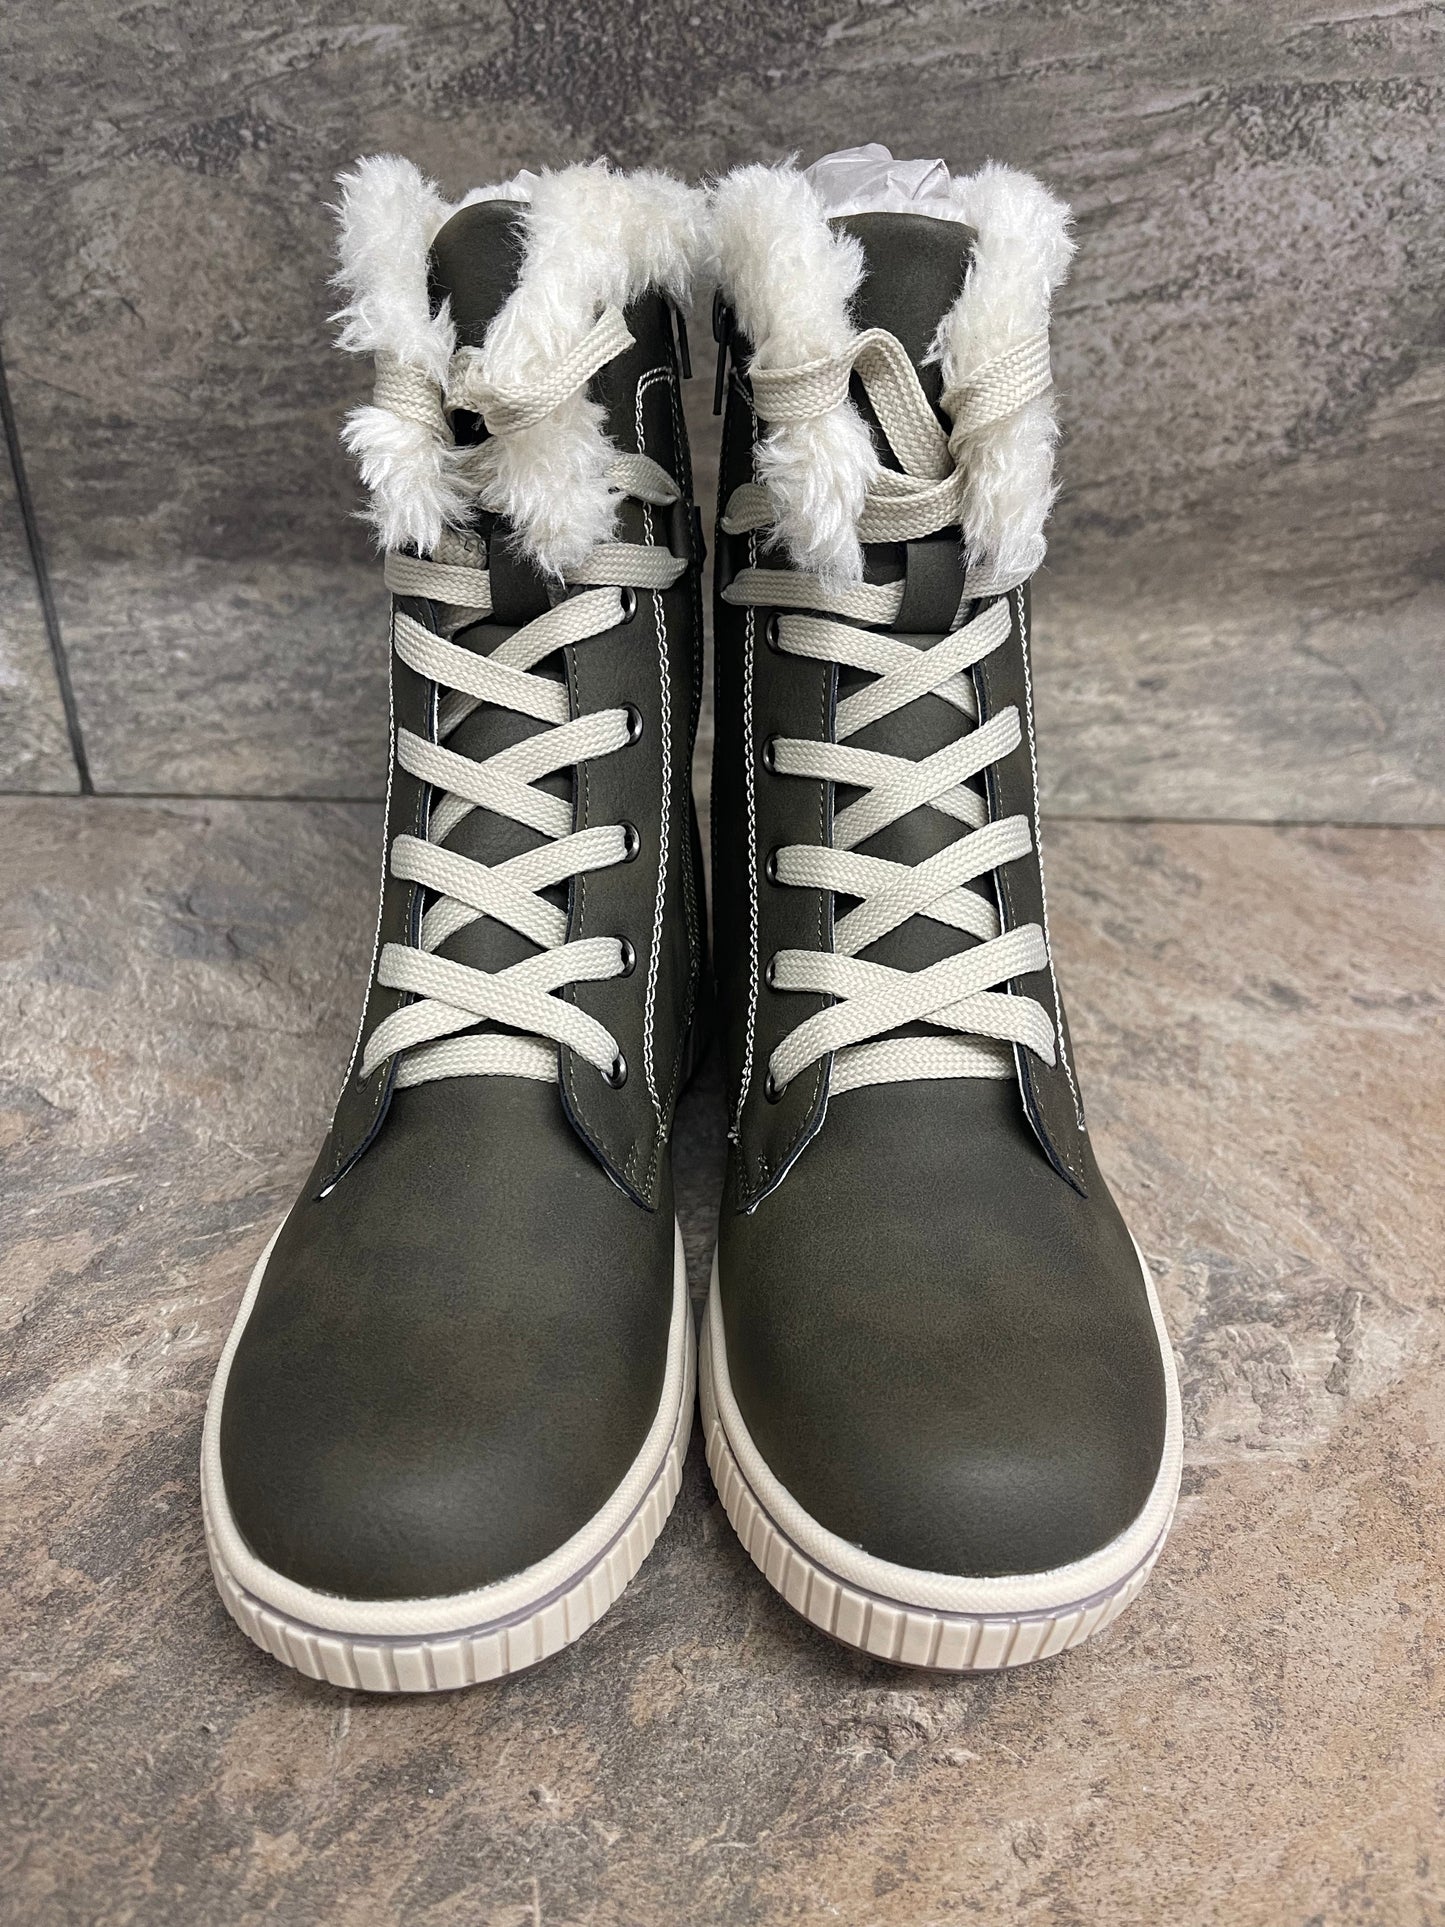 Khaki high top winter boots sizes 3-8